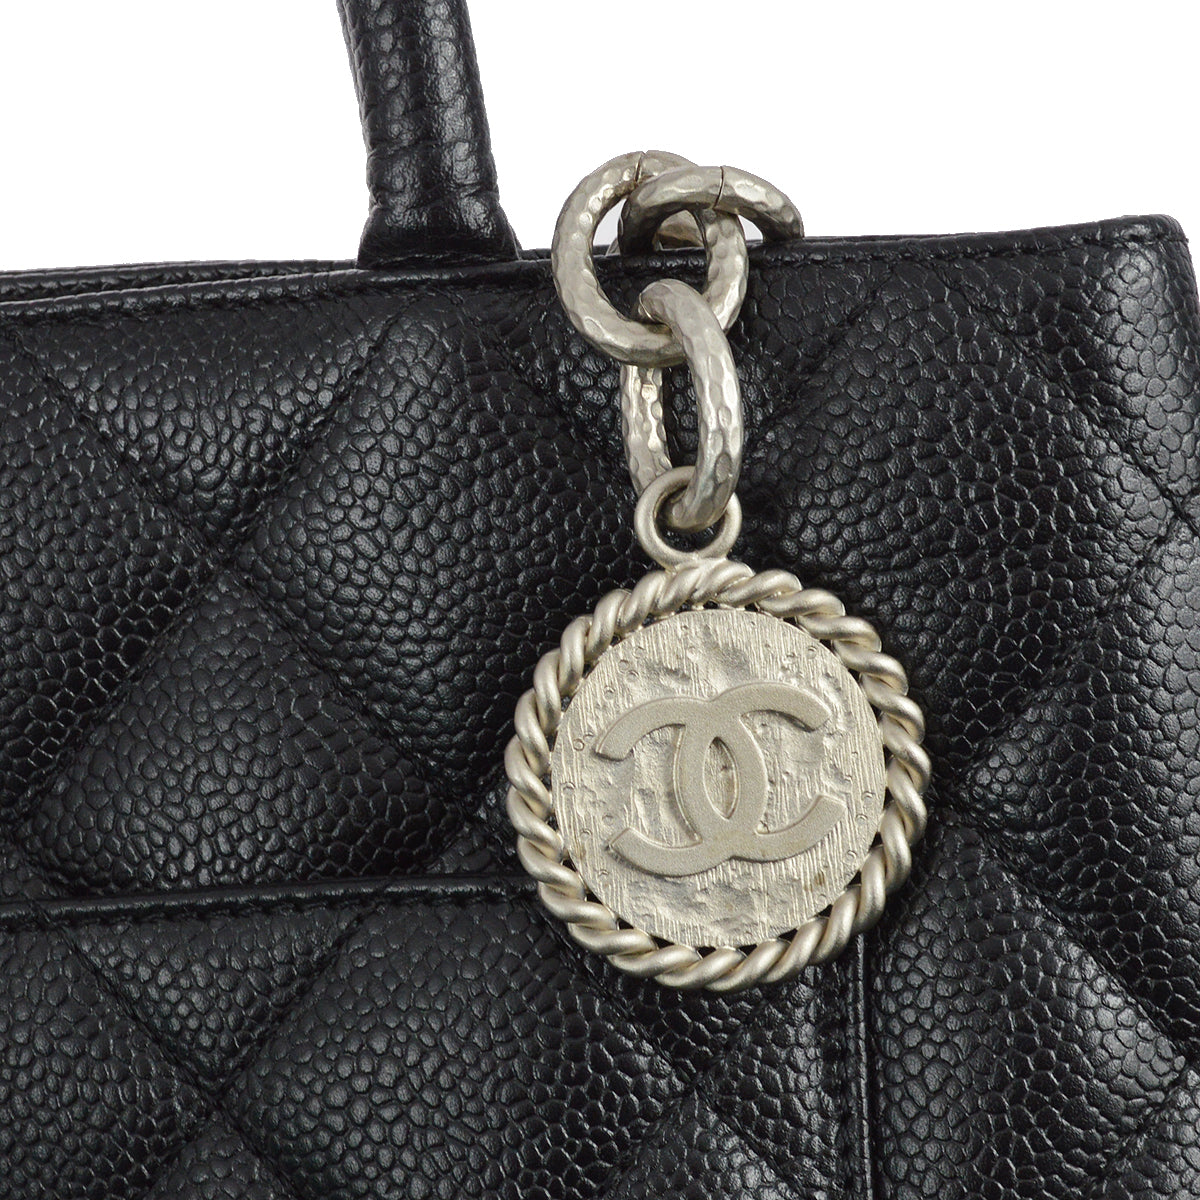 Chanel Black Caviar Medallion Tote Handbag